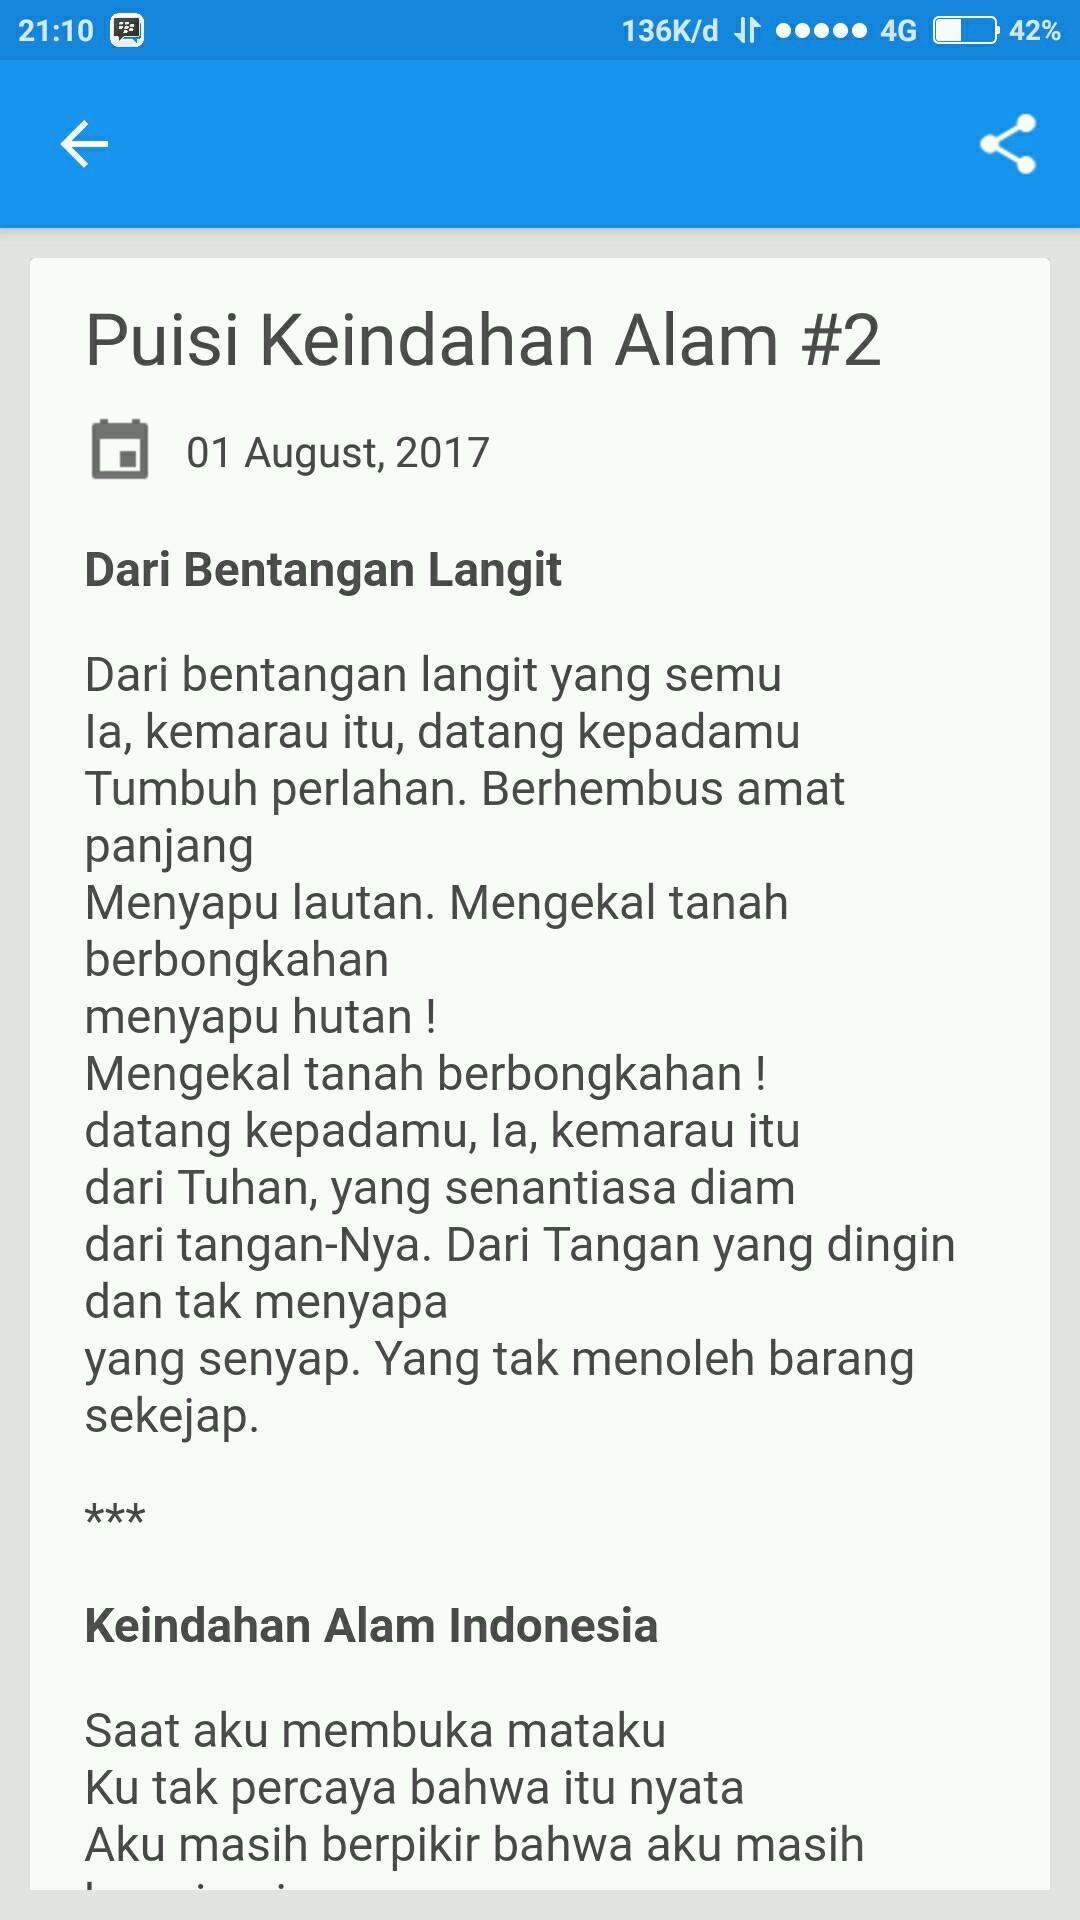 Puisi Keindahan Alam Semesta For Android Apk Download